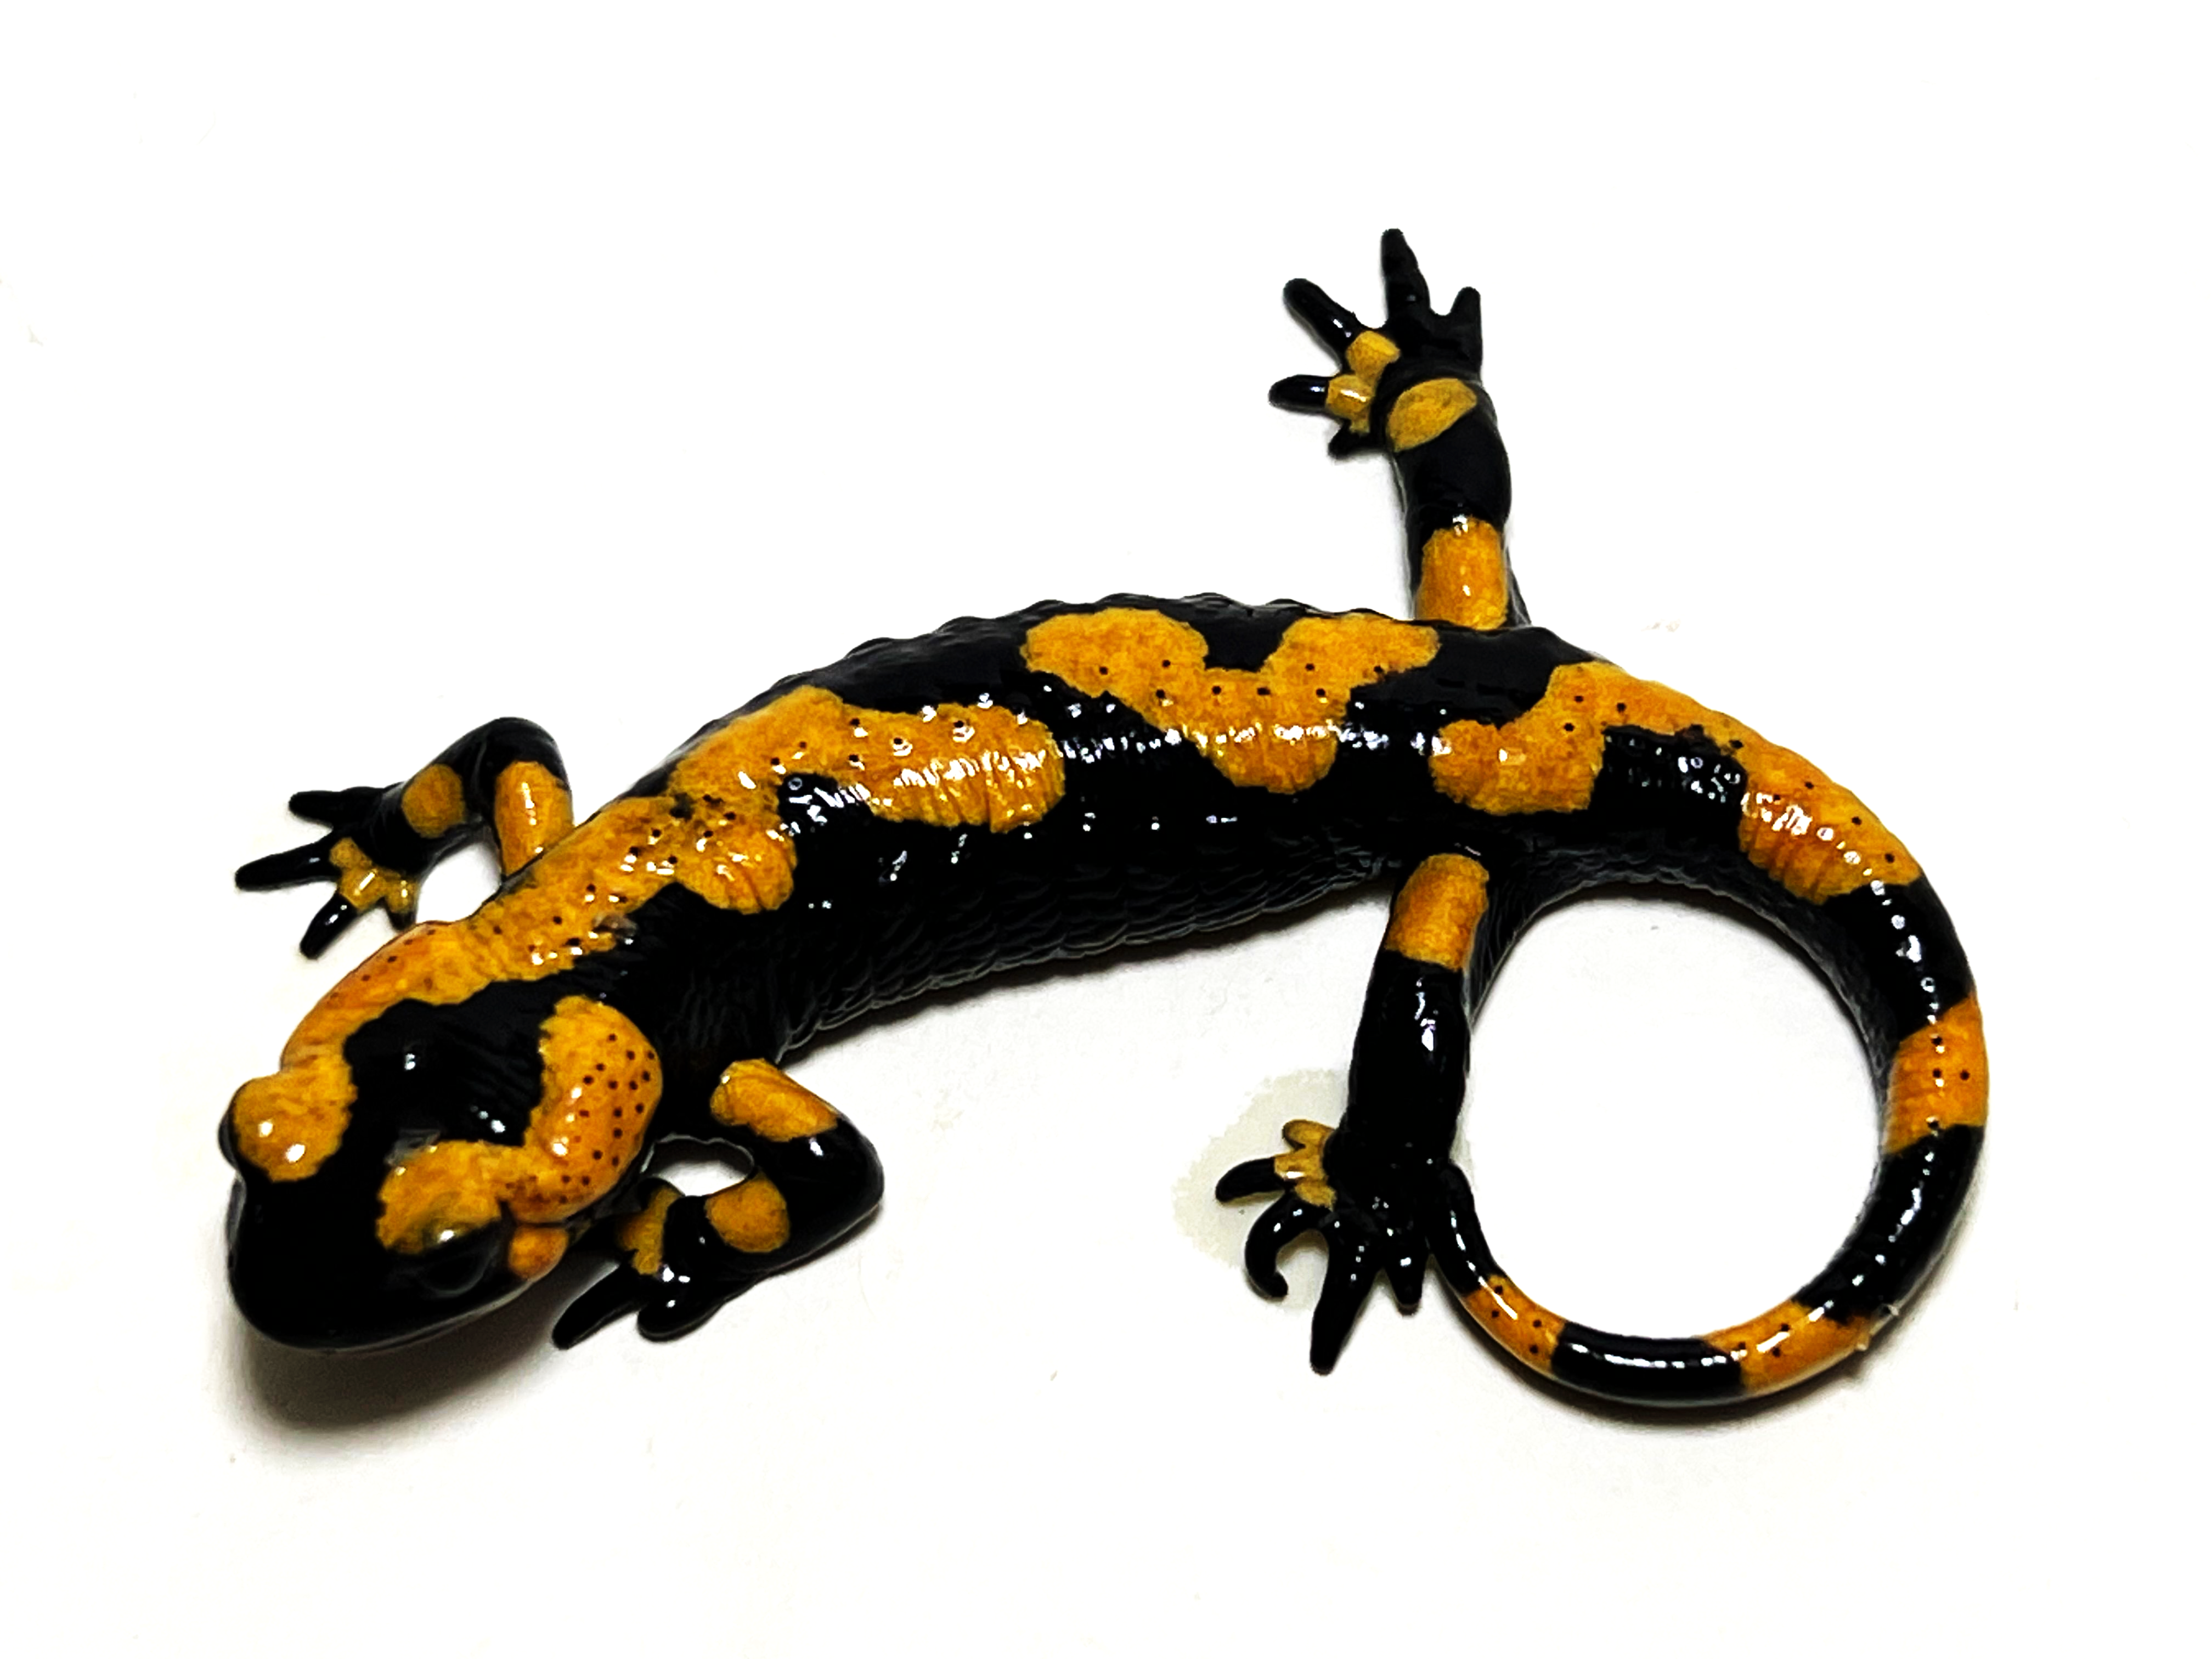 Salamandra S. S., Feuersalamander